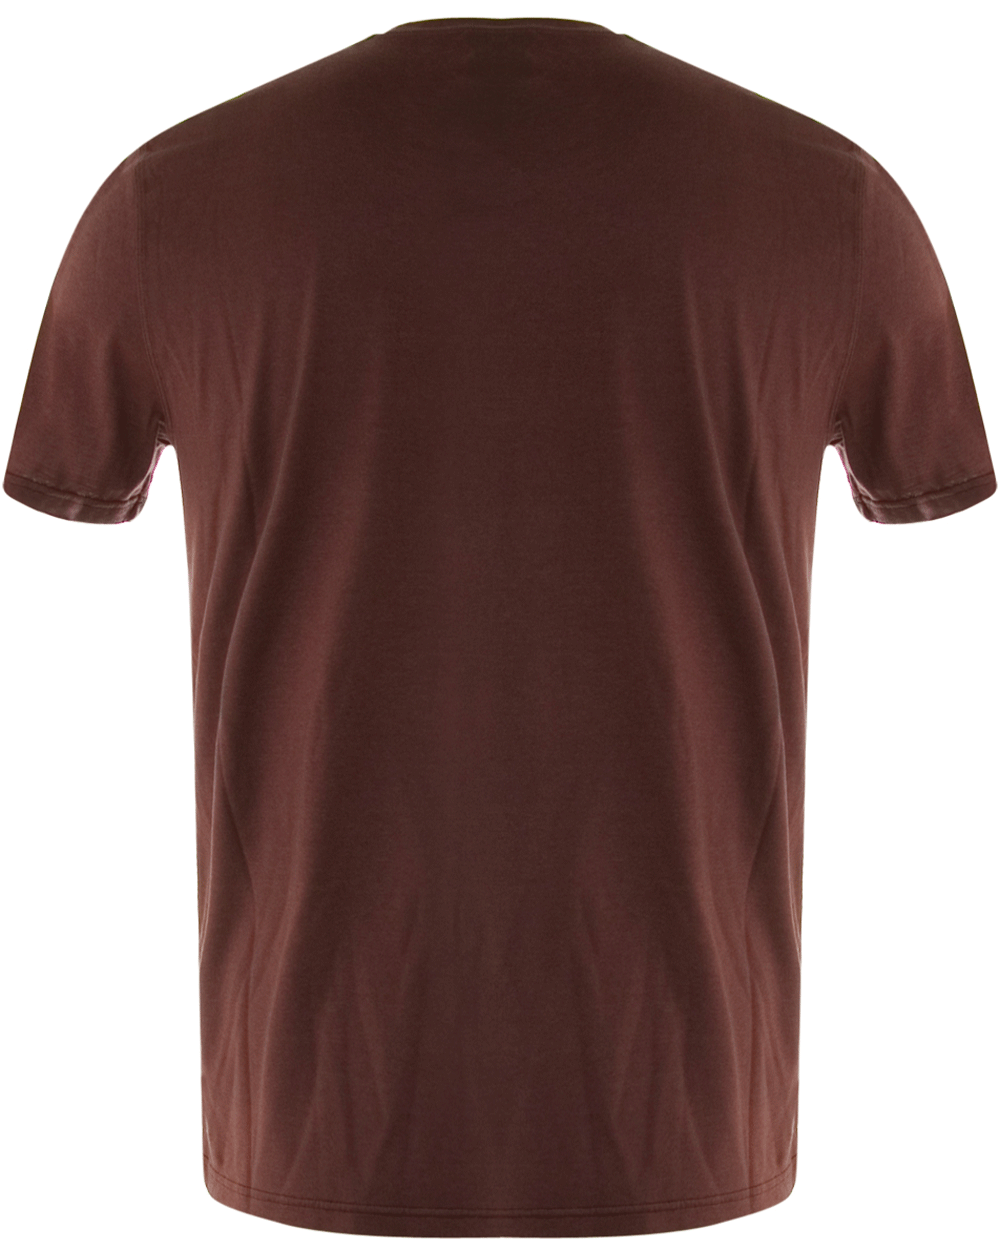 Washed Burgundy T-Shirt